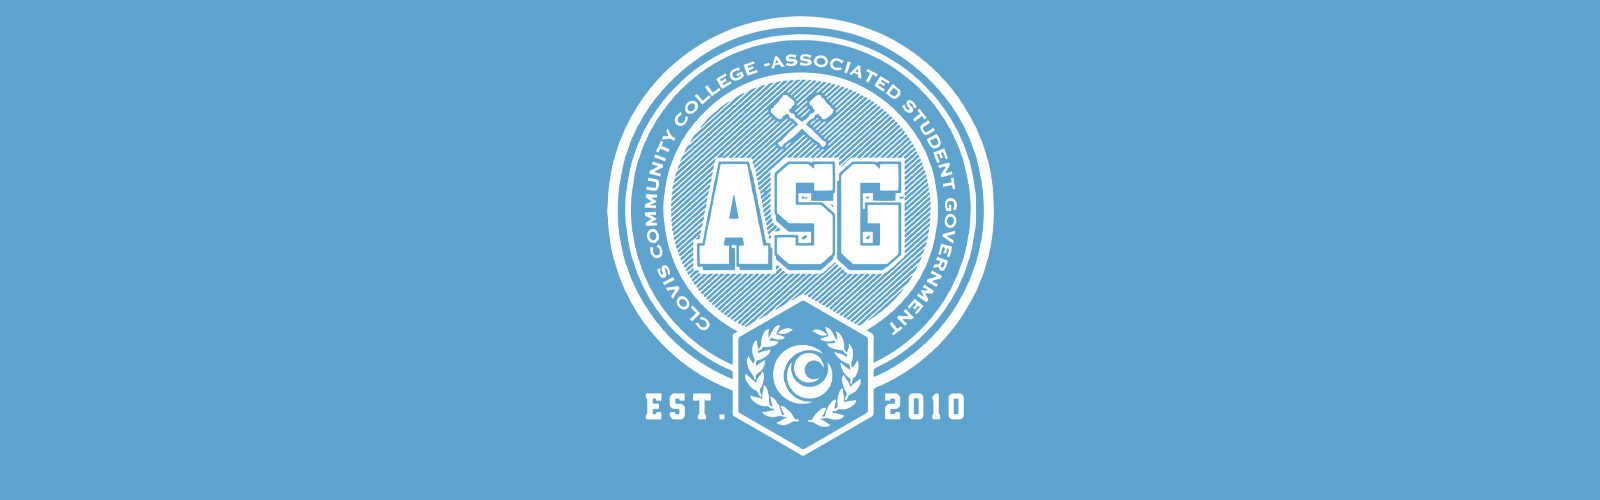 ASG logo as decorative banner